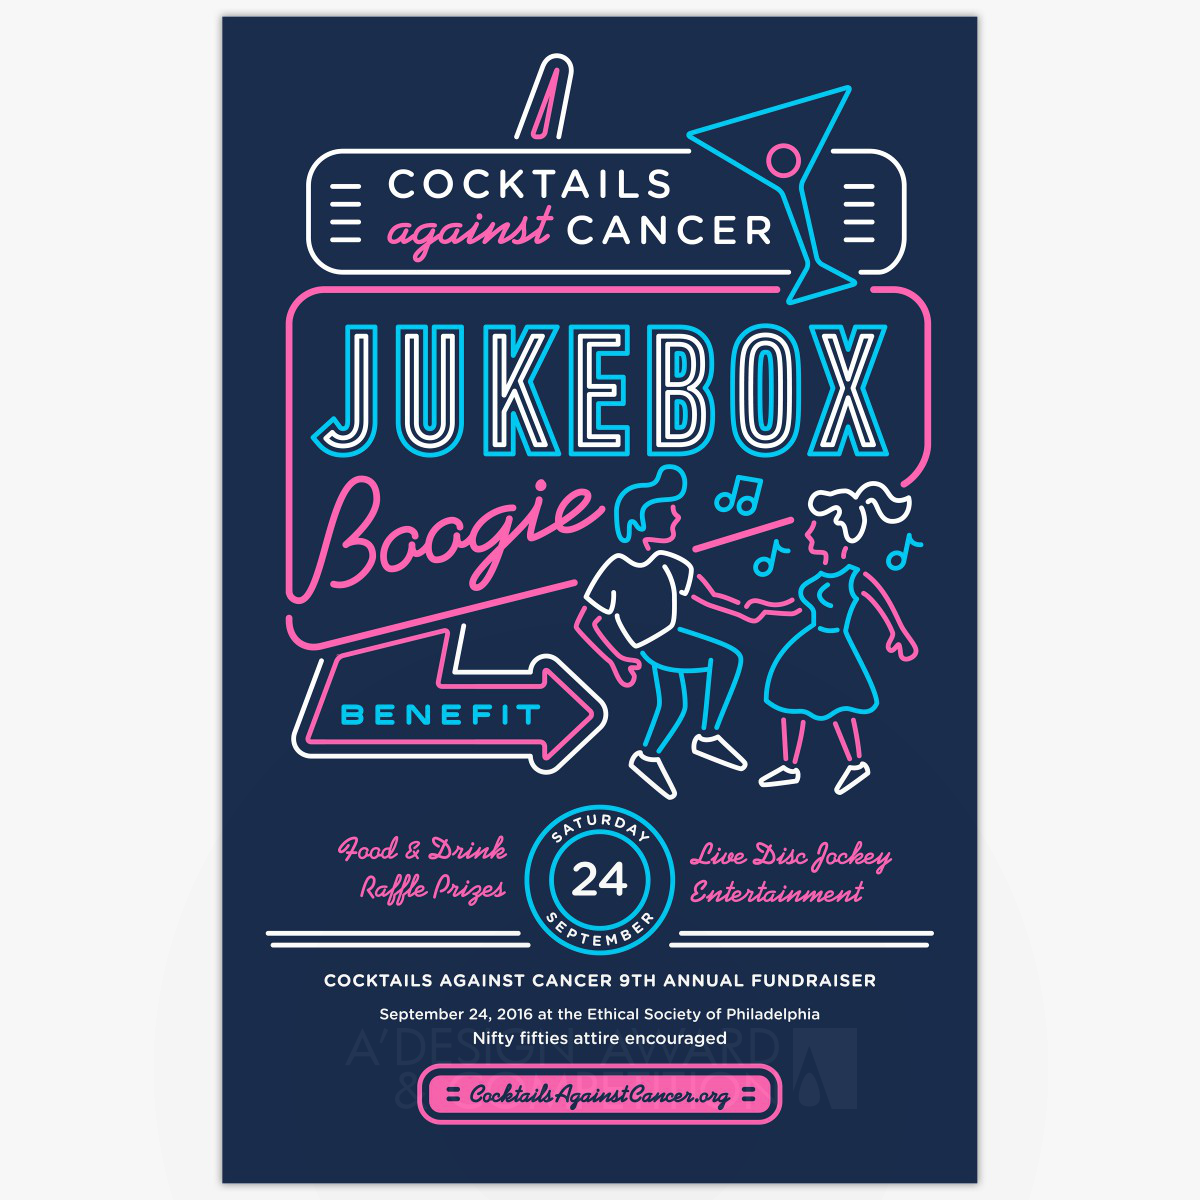 Jukebox Boogie Fundraiser Poster by Kathy Mueller